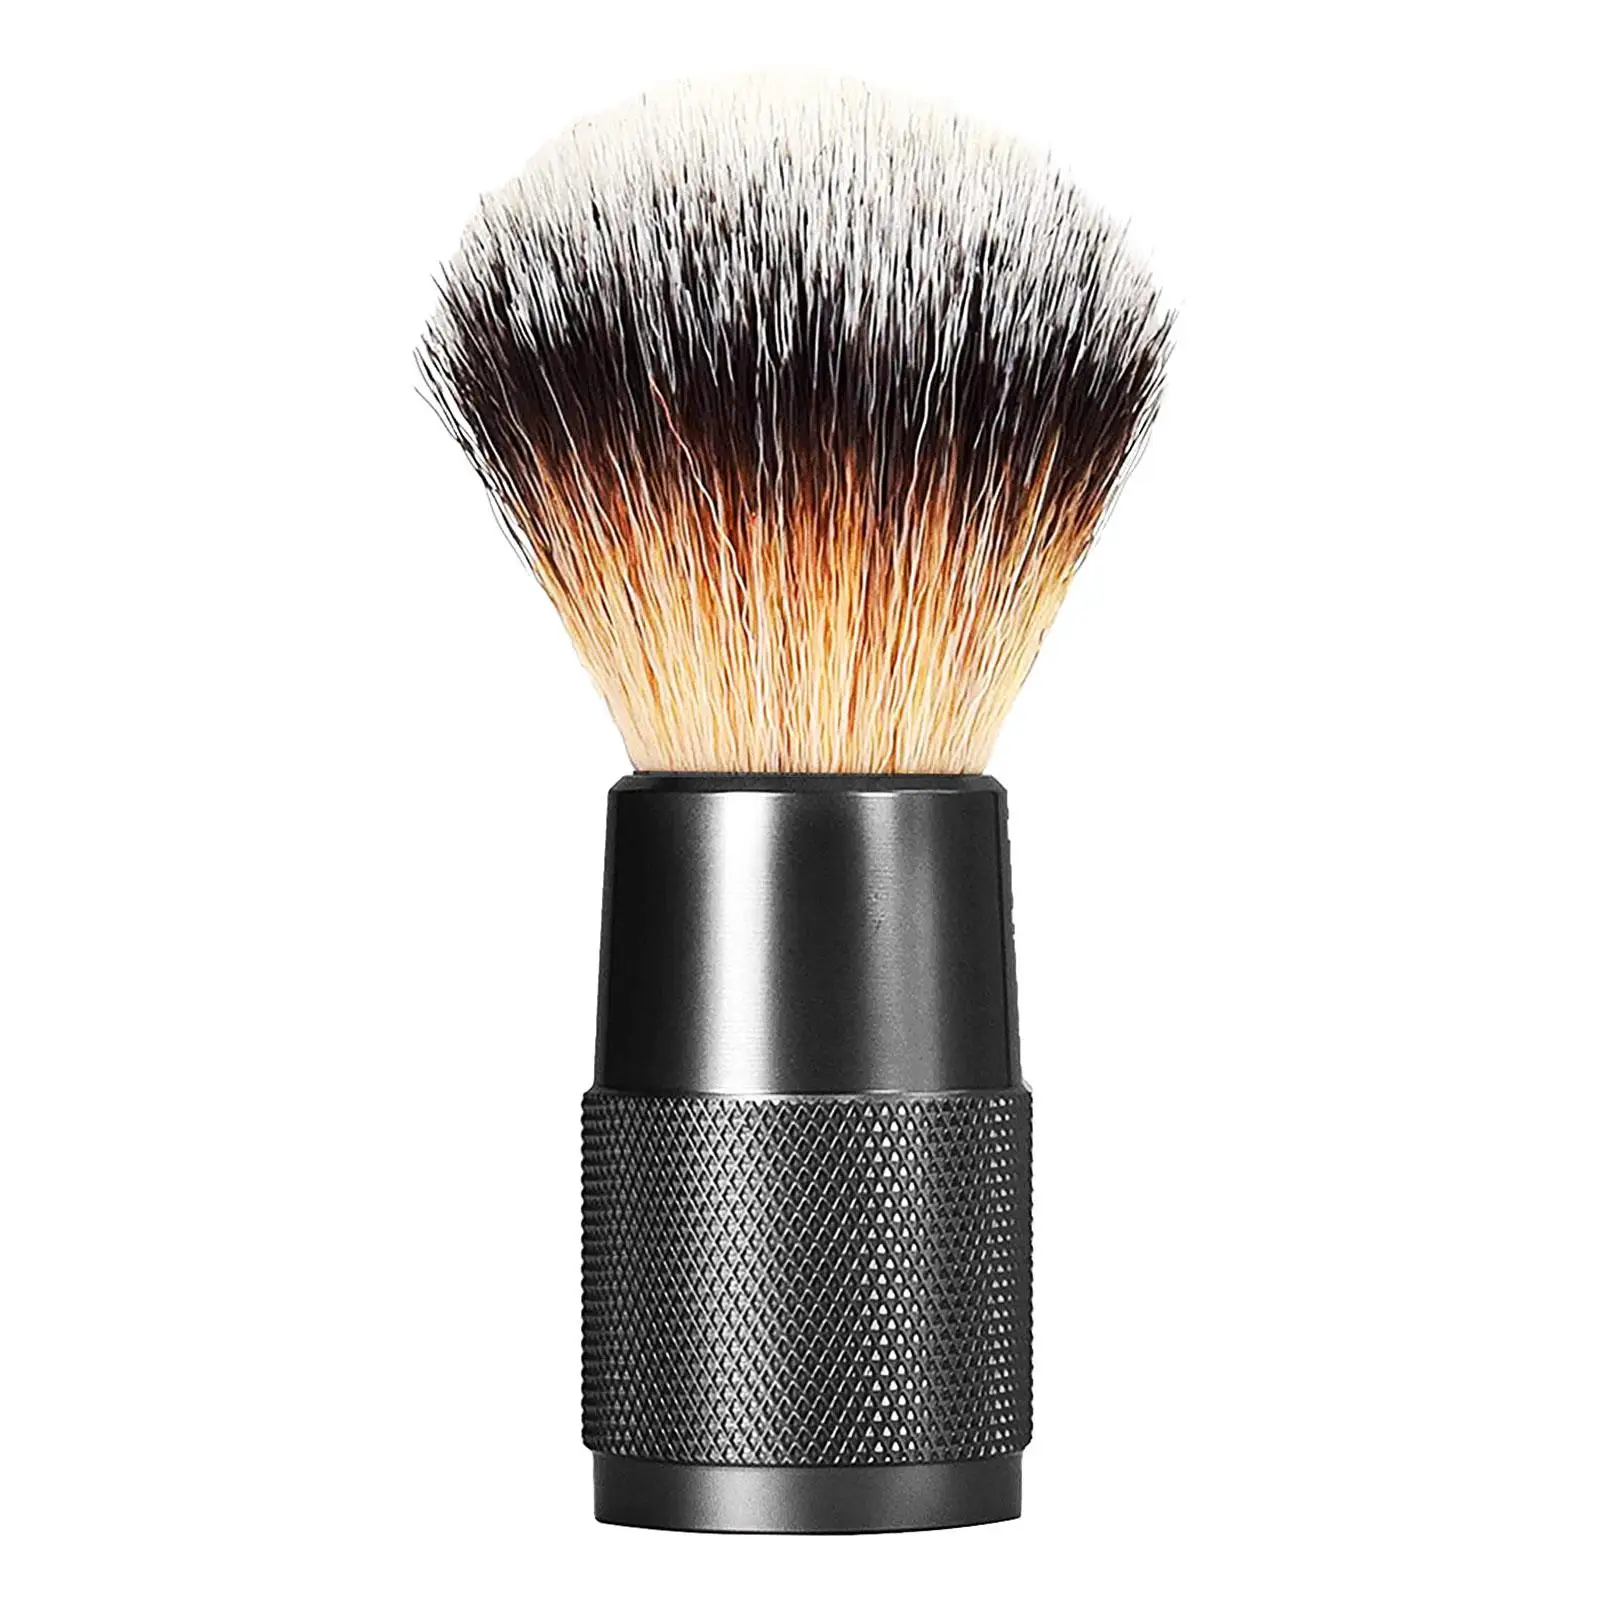 Beard Shaving Brush Lightweight Shaving Accessory Birthday Gift Durable Hair Salon Tool Nylon Synthetic Bristles Aluminum Handle